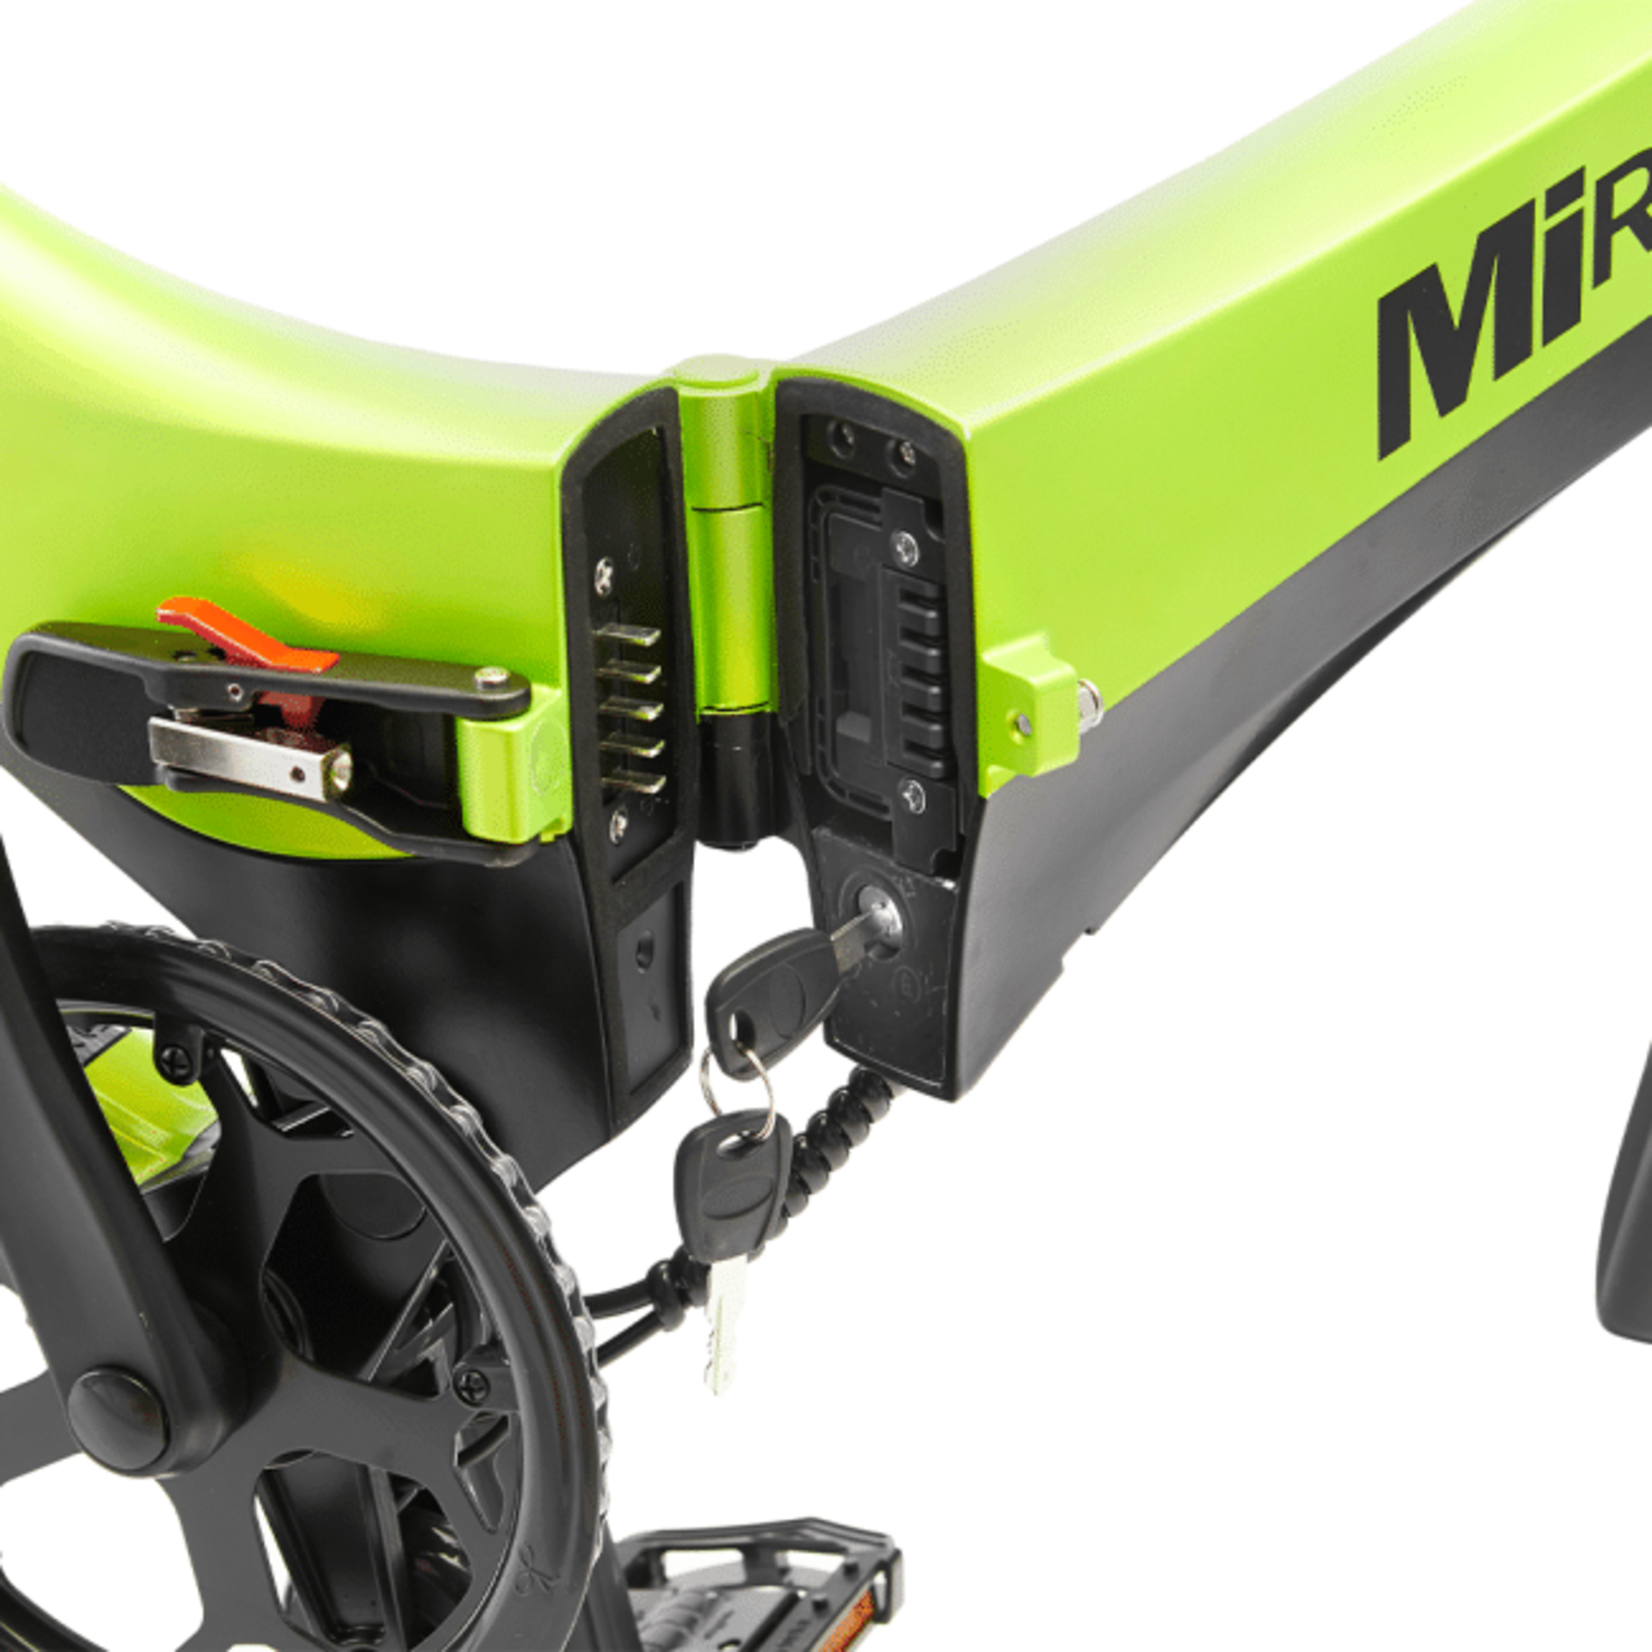 Mirider MiRiDER One folding electric bike Acid Green